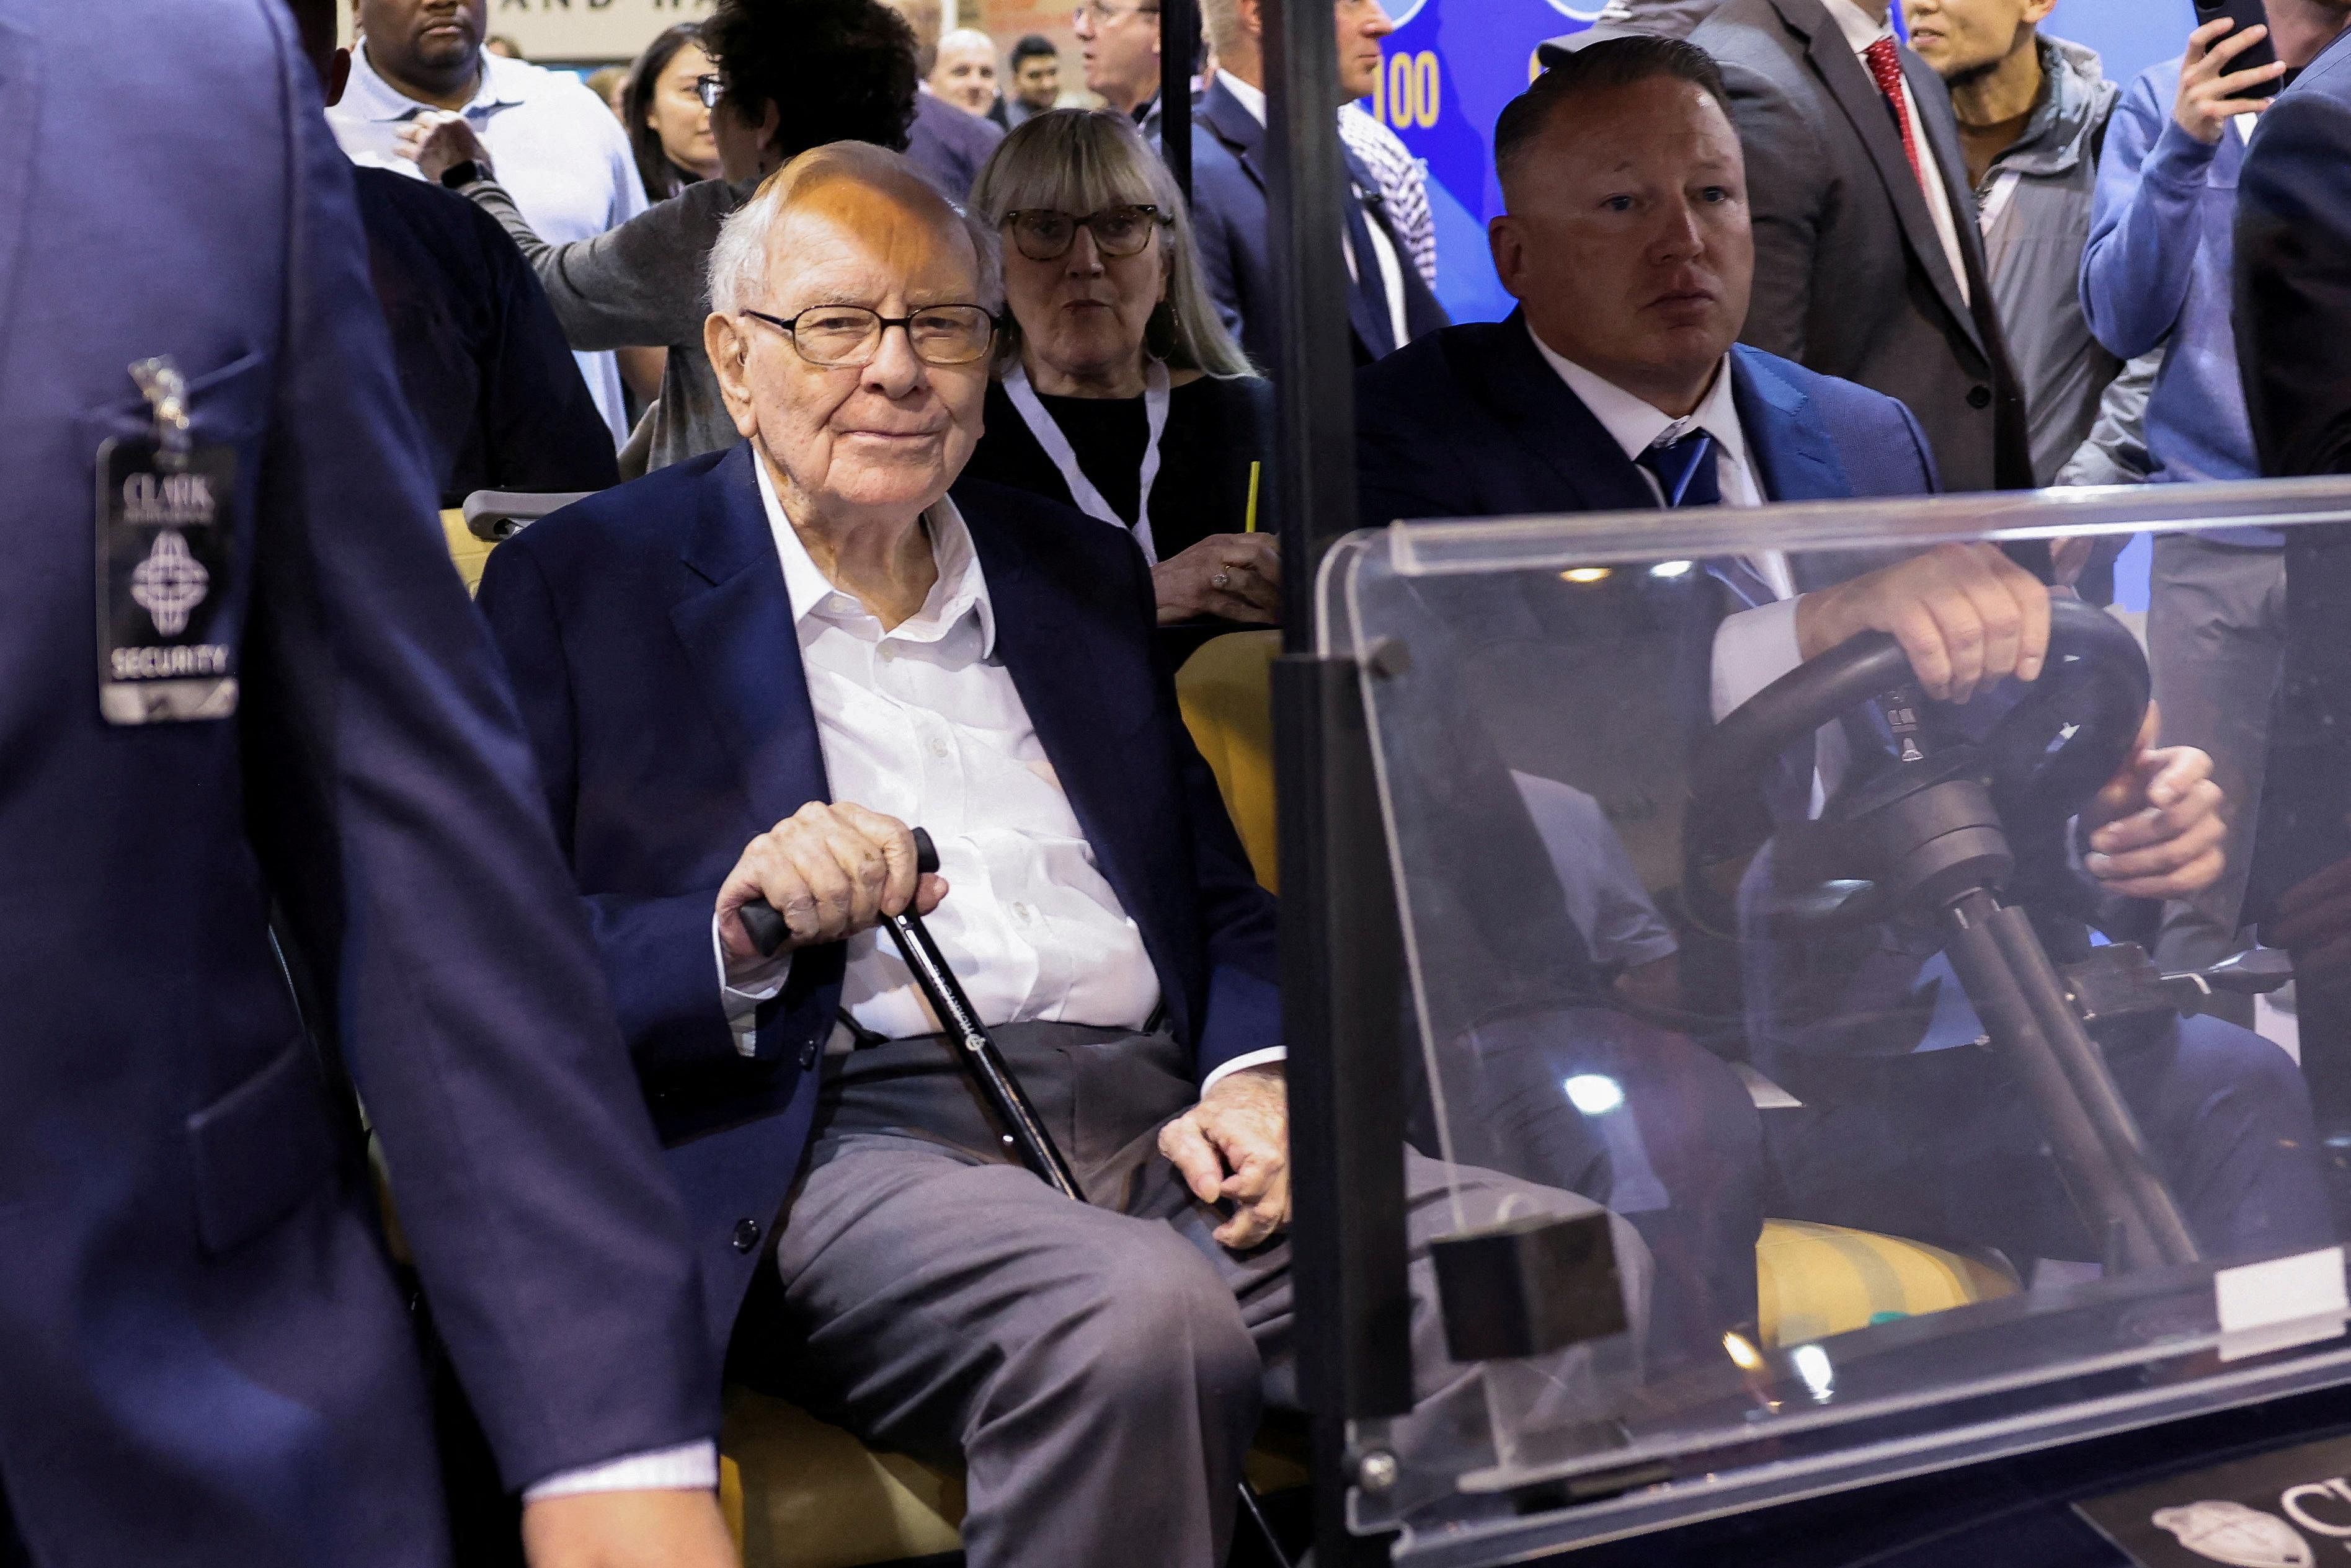 Warren Buffett says Berkshire is in good hands, lauds Apple despite trimming stake